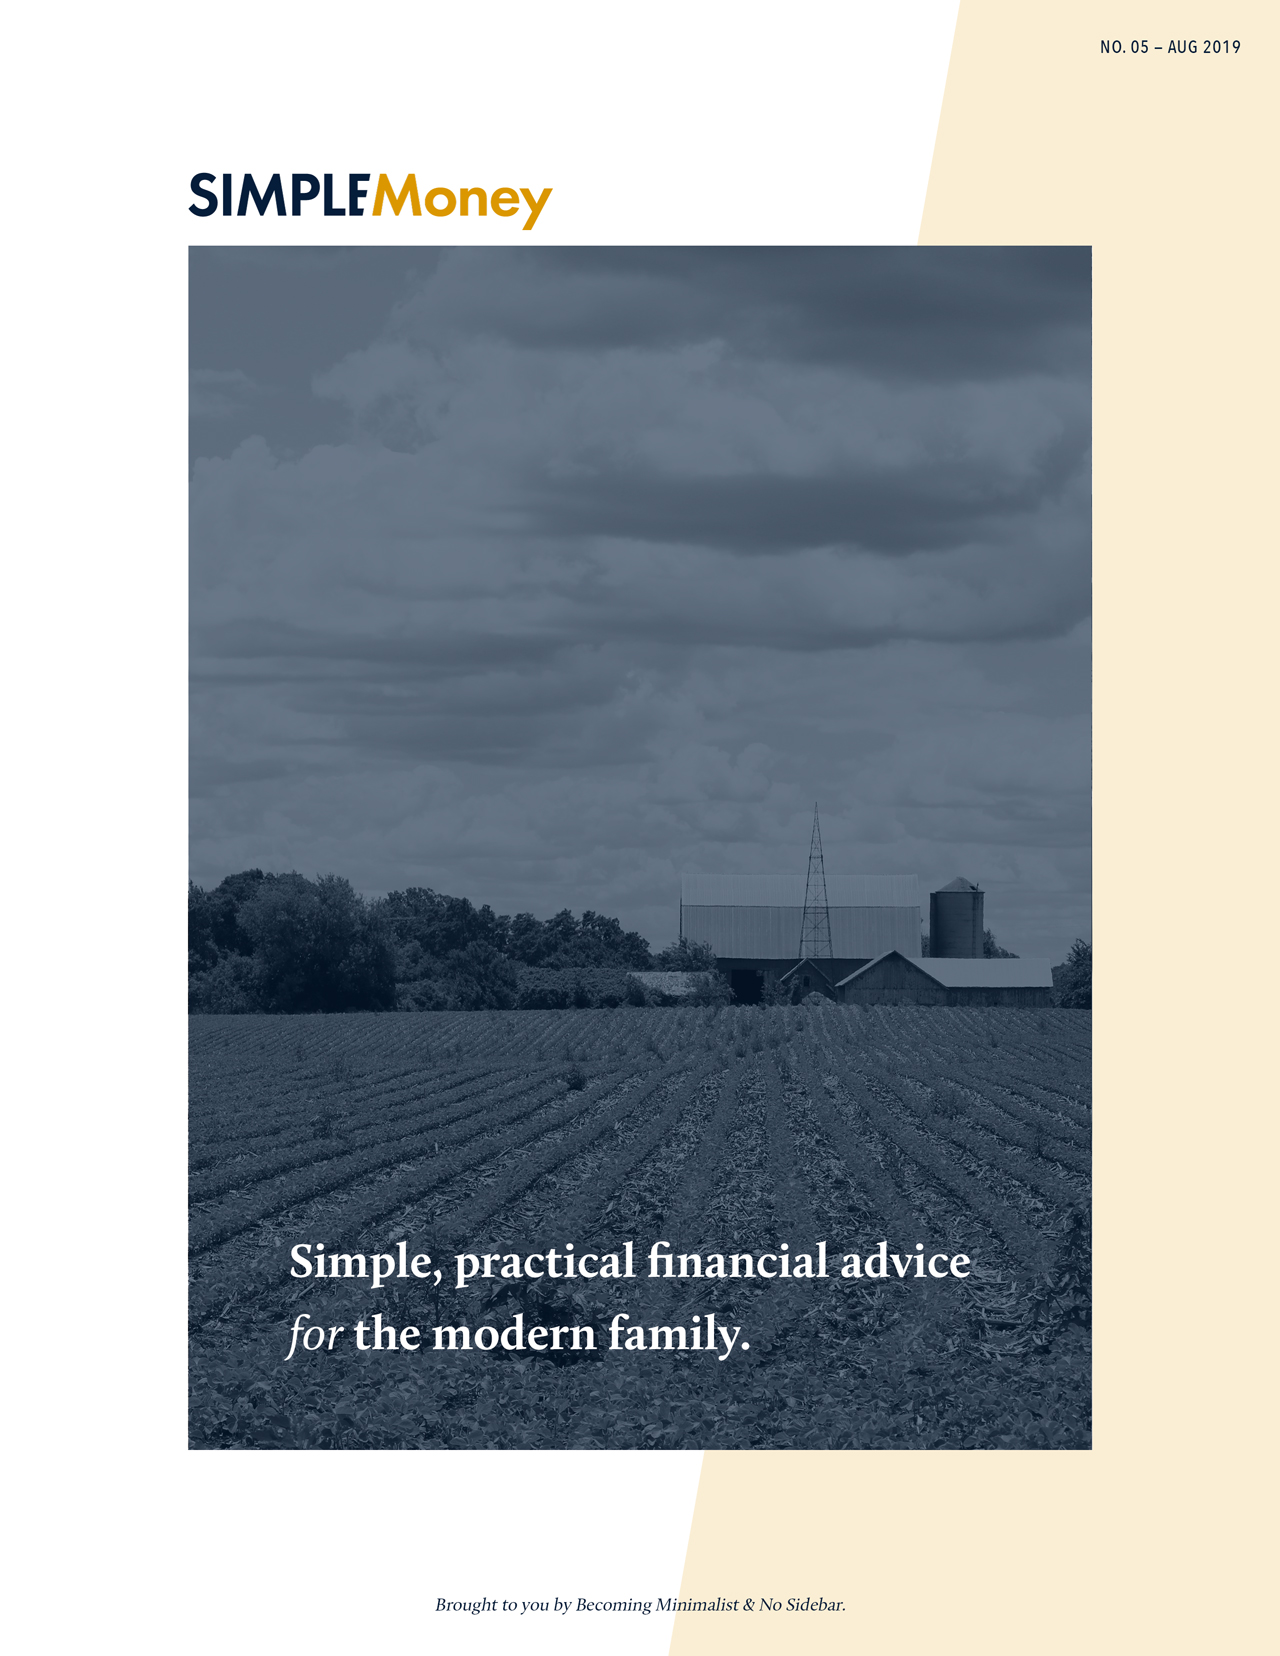 Simple Money Magazine Issue #05